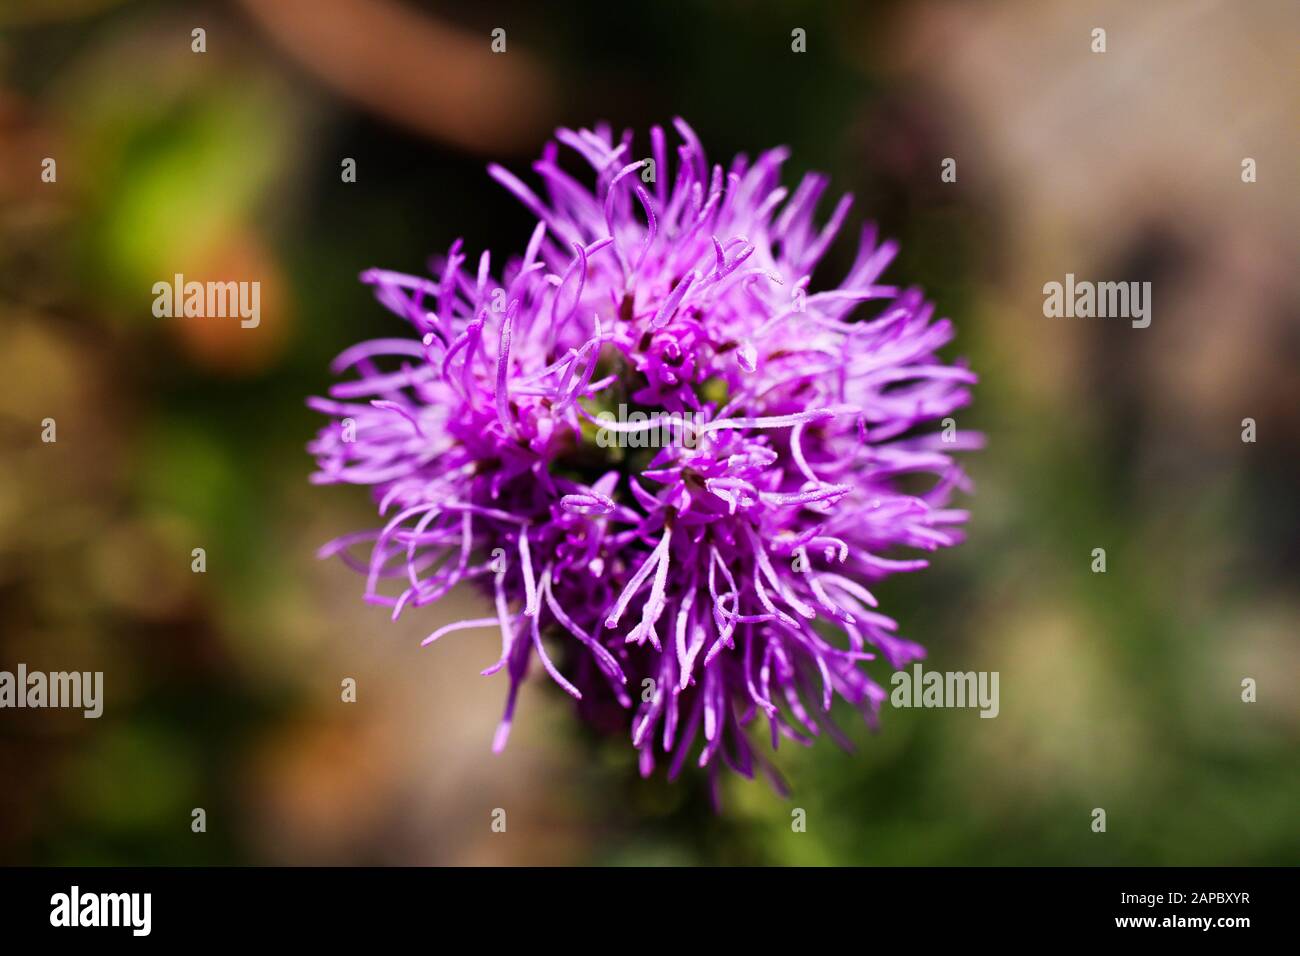 Macro close up of pink purple kobold flower (Liatris spicata) against blurred background Stock Photo